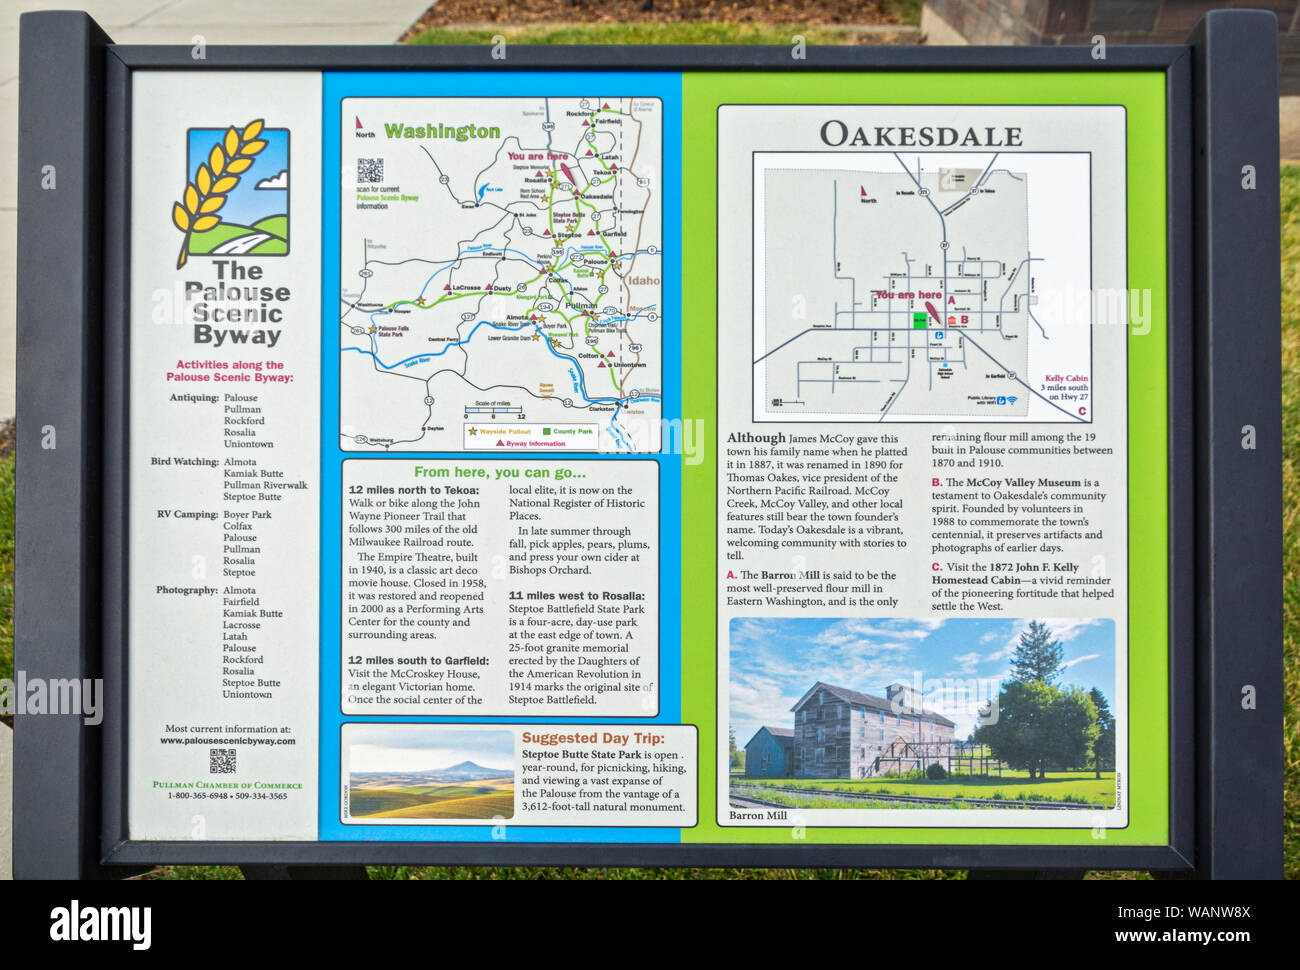 Washington, Palouse Region, Oakesdale, touristische Informationen und Karte Stockfoto